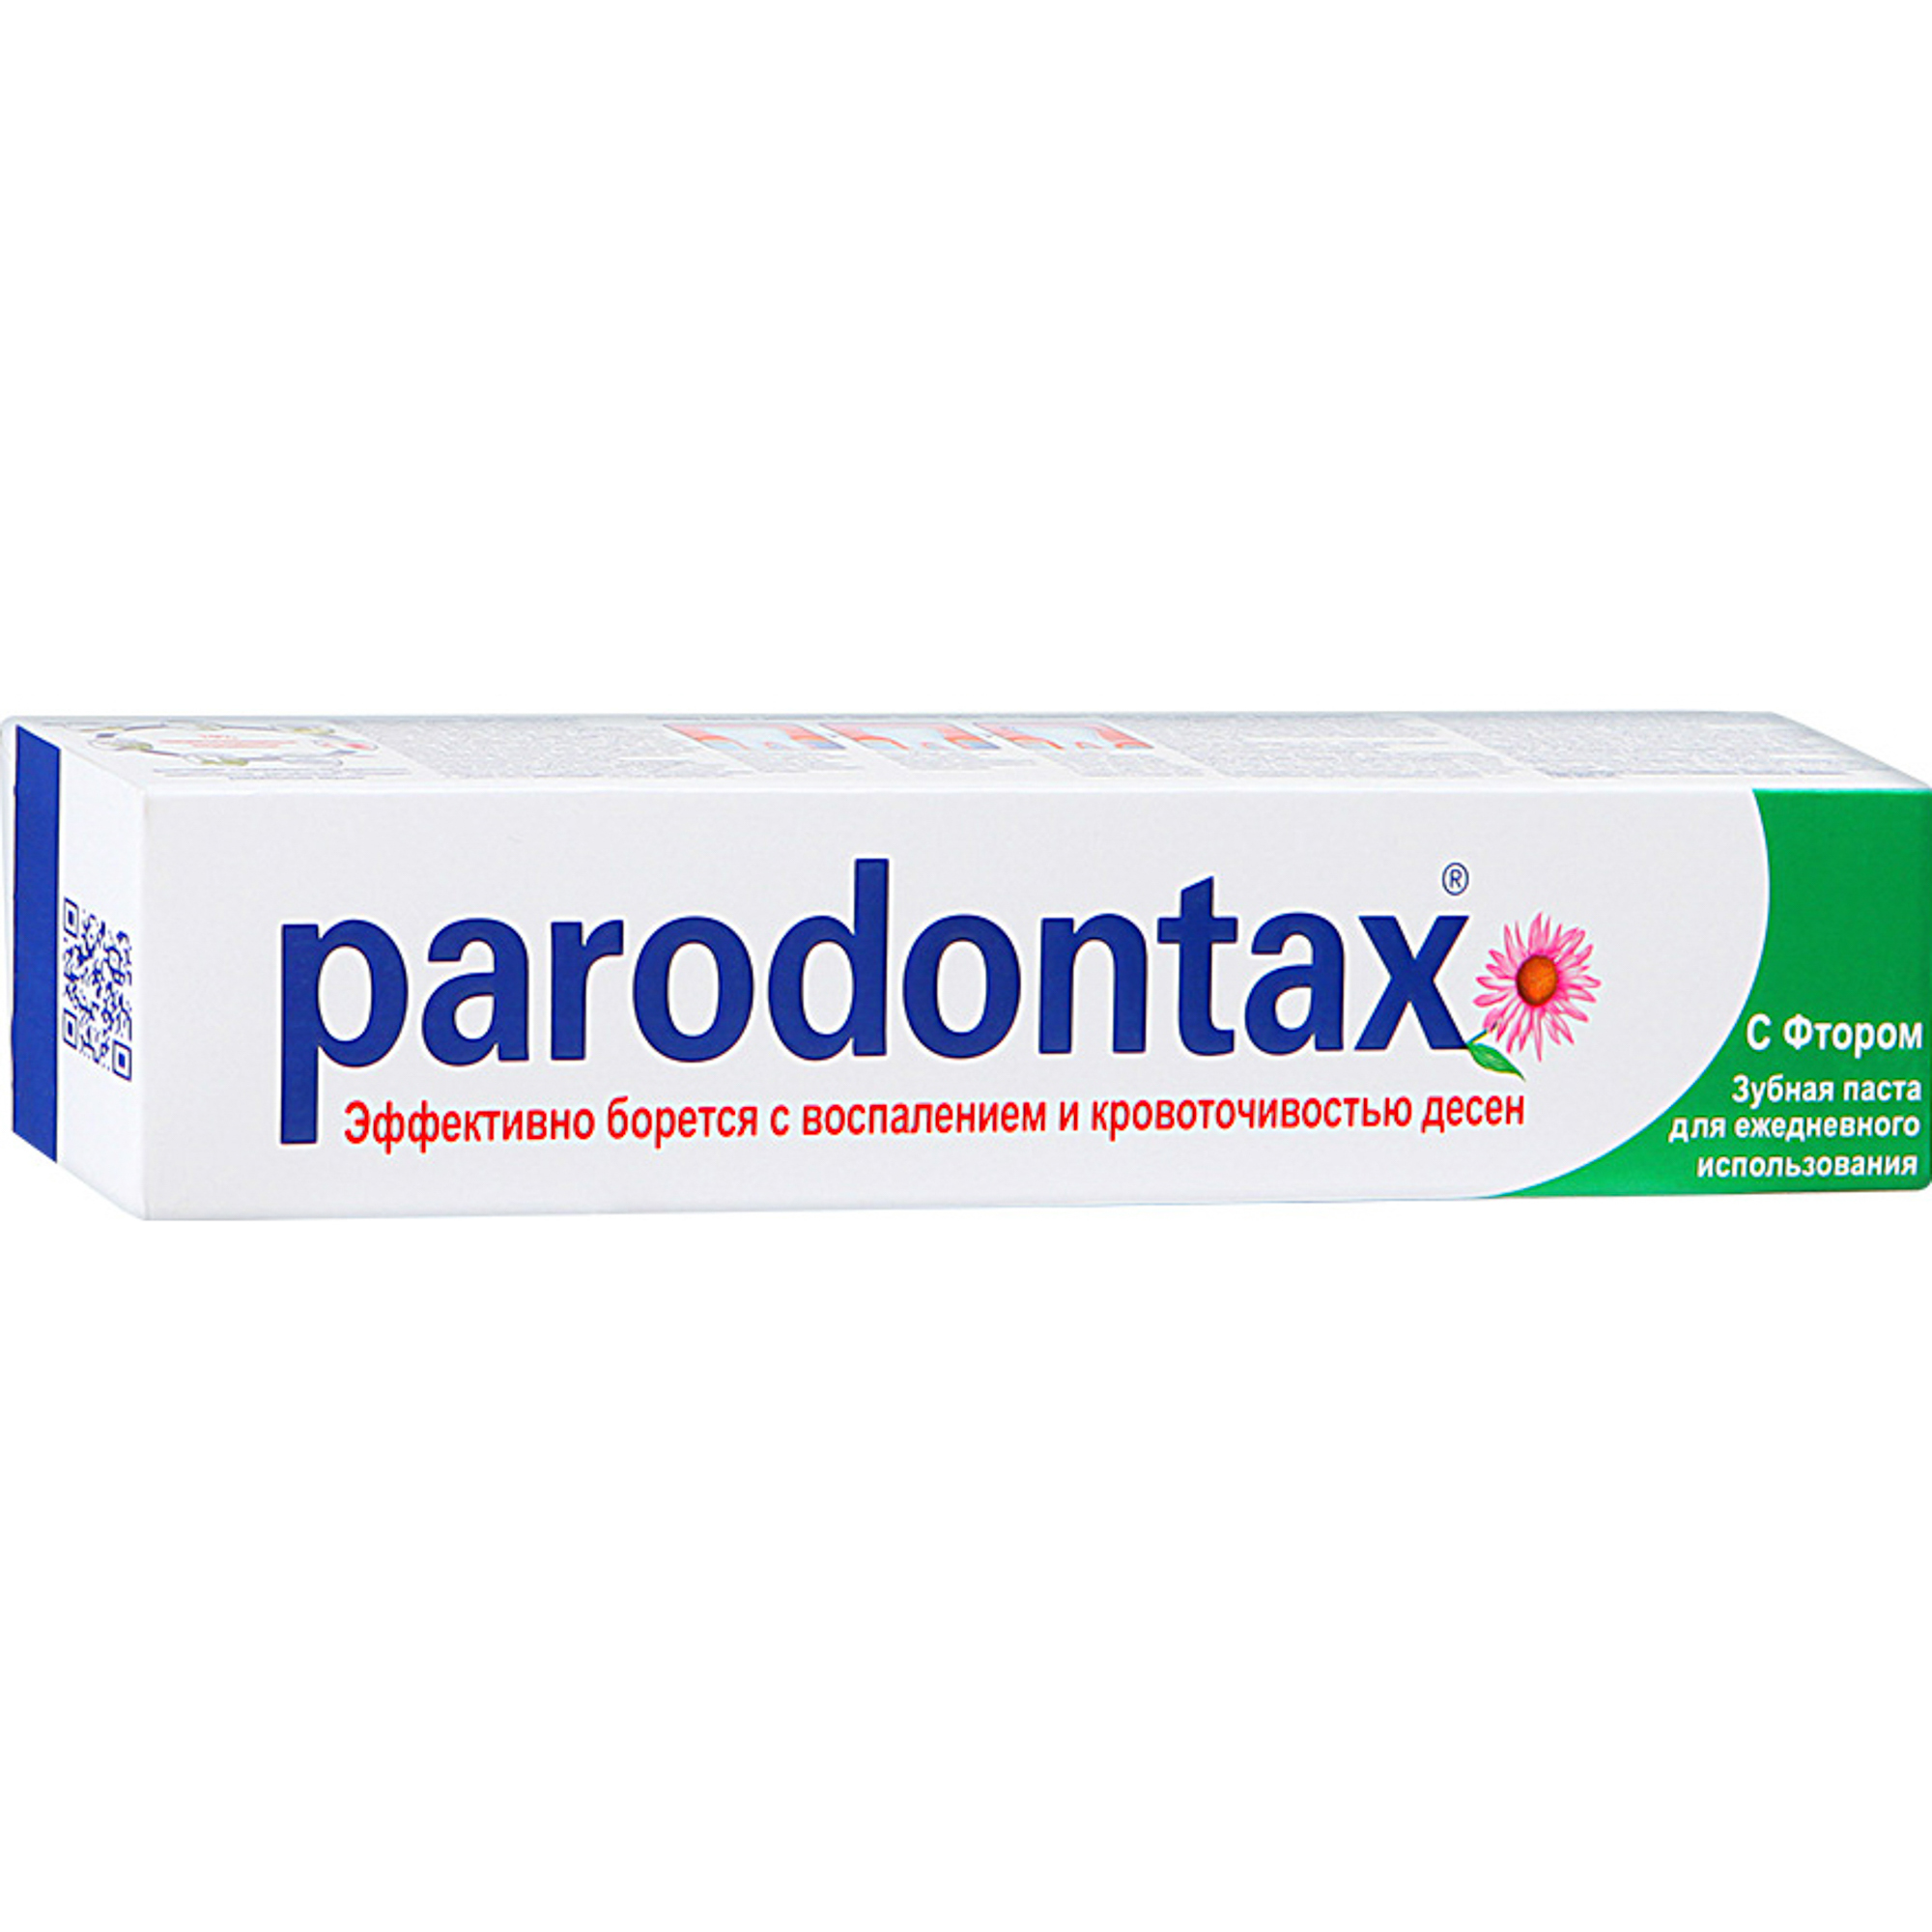 Зубная паста Parodontax С фтором 50 мл зубная паста parodontax с фтором 75 мл